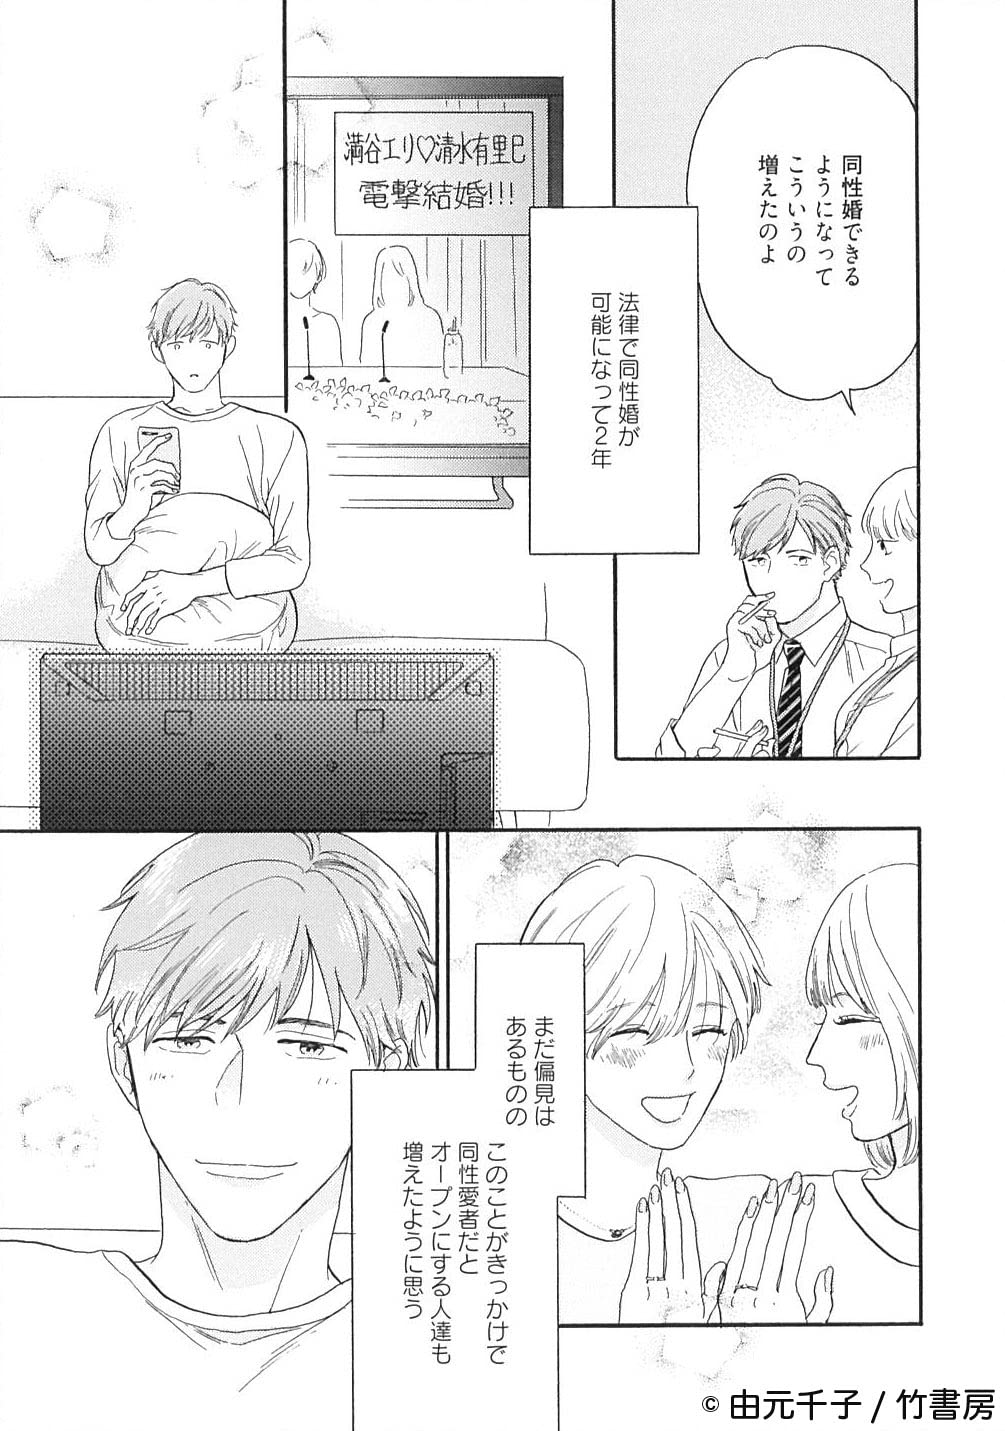 Boys Love (Yaoi) Comics - Romantic Marriage (ロマンティックマリッジ (バンブーコミックス 麗人セレクション)) / Yoshimoto Senco